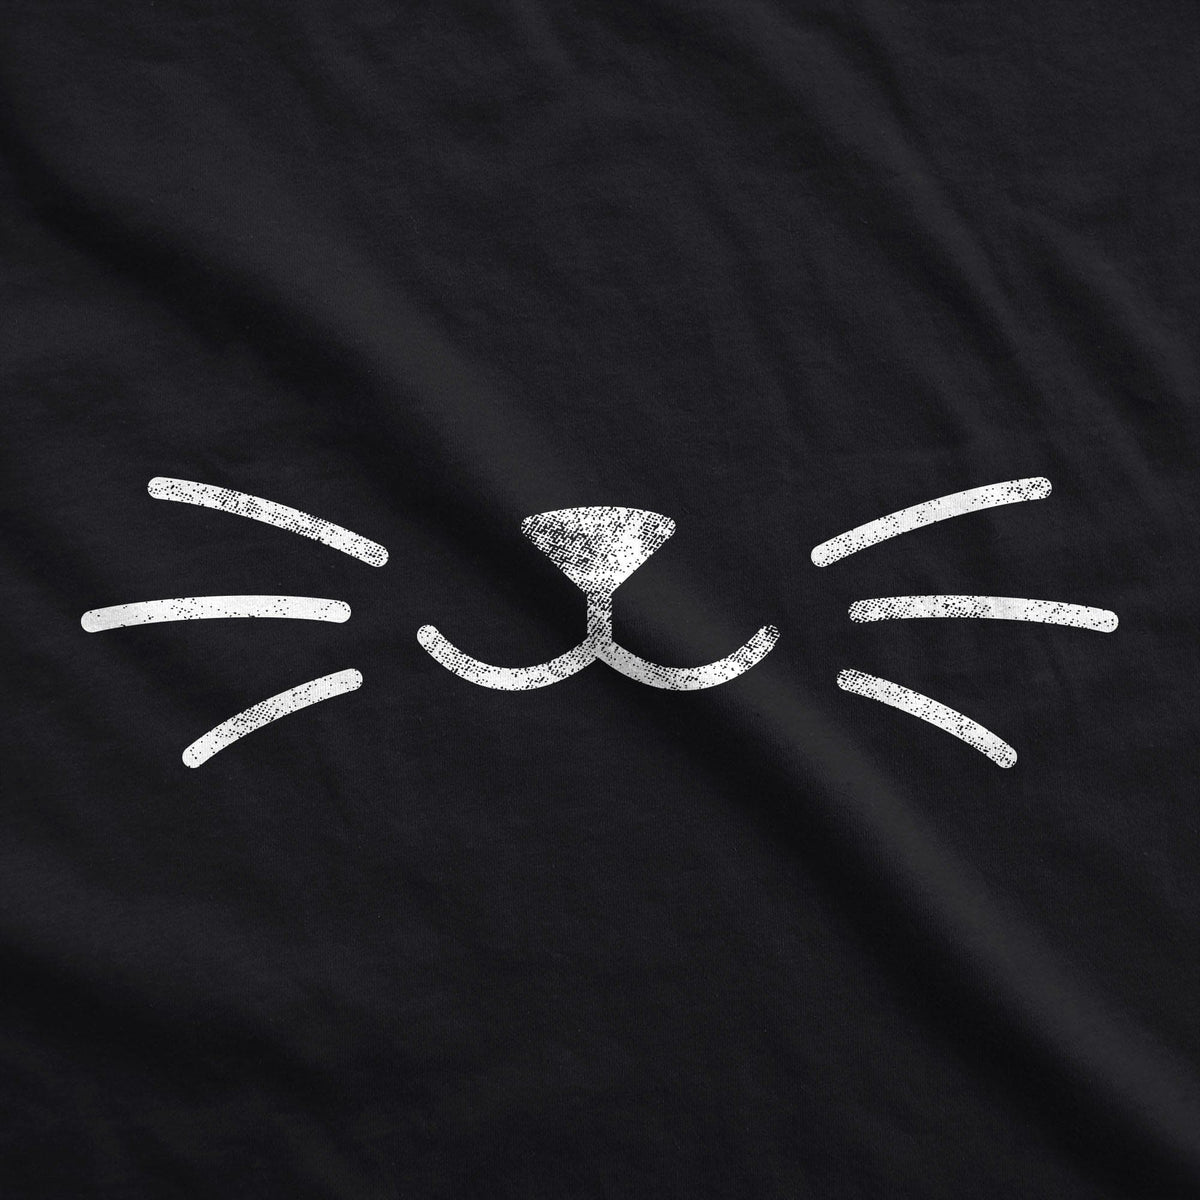 Cat Mouth Face Mask Mask - Crazy Dog T-Shirts